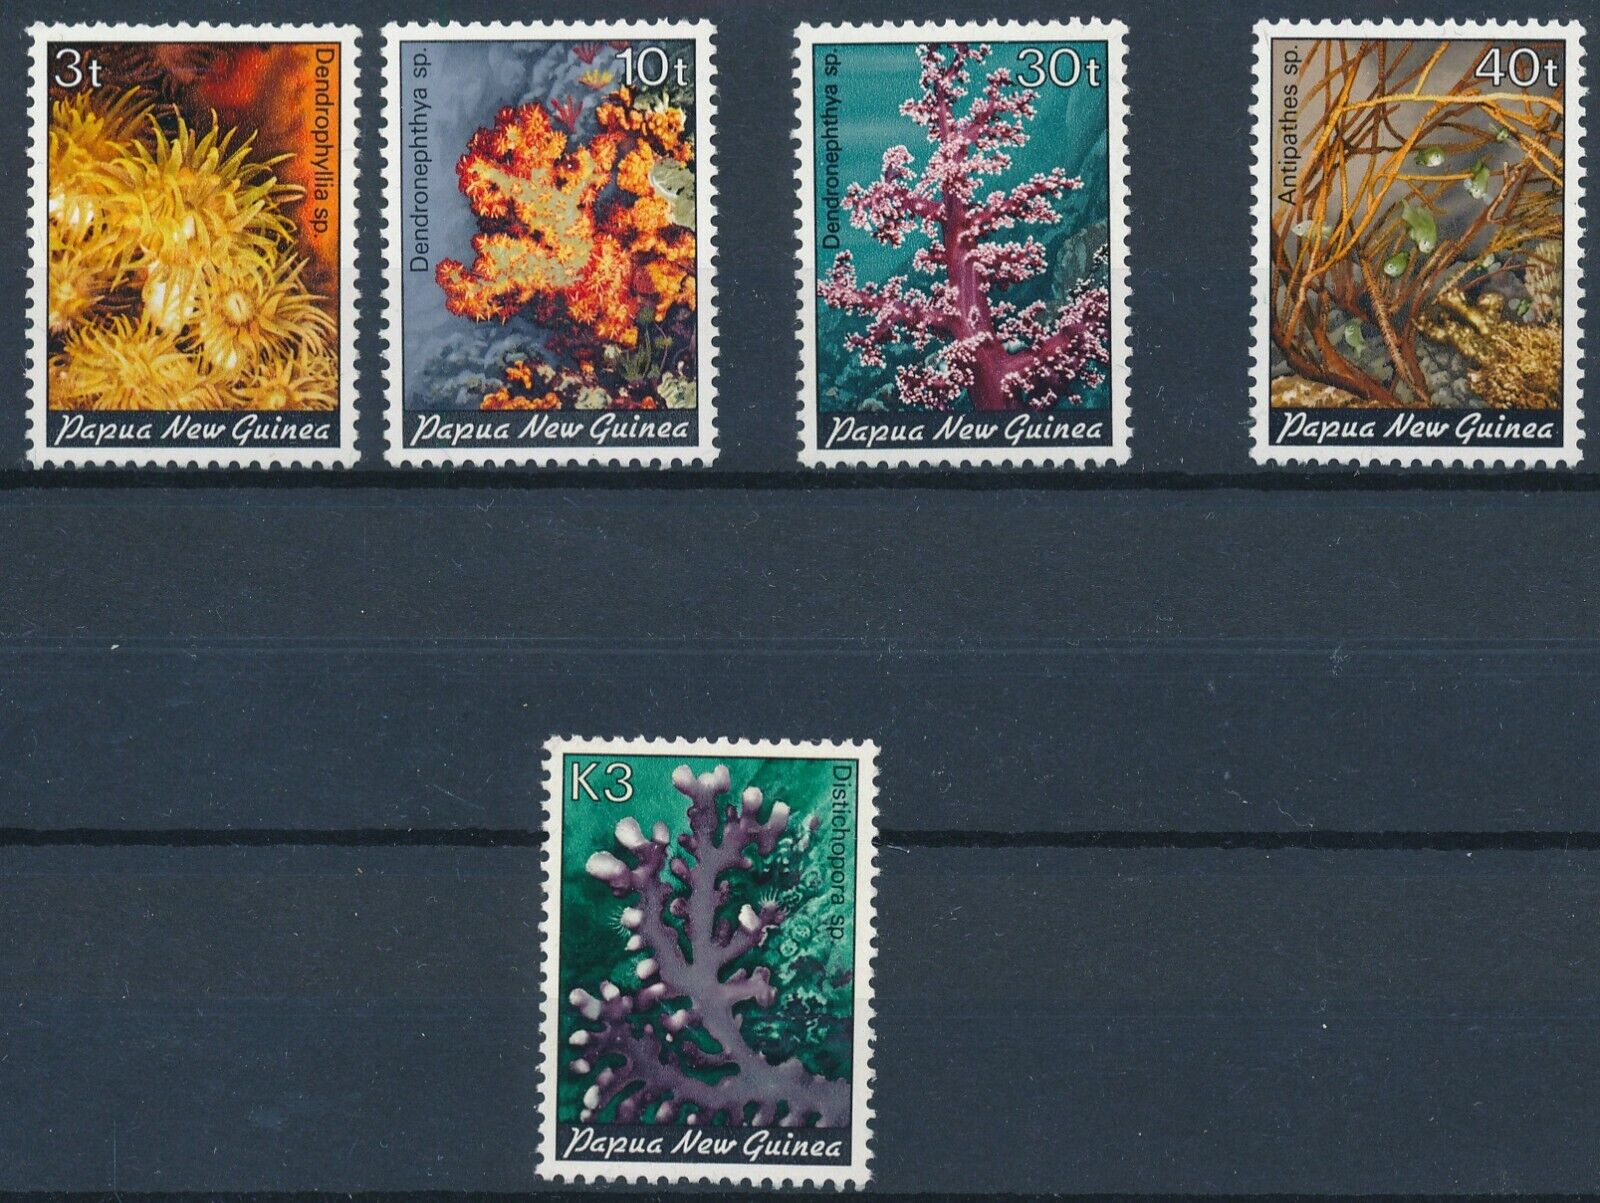 [BIN19107] Papua new Guinea 1983 Corals good set very fine MNH stamps